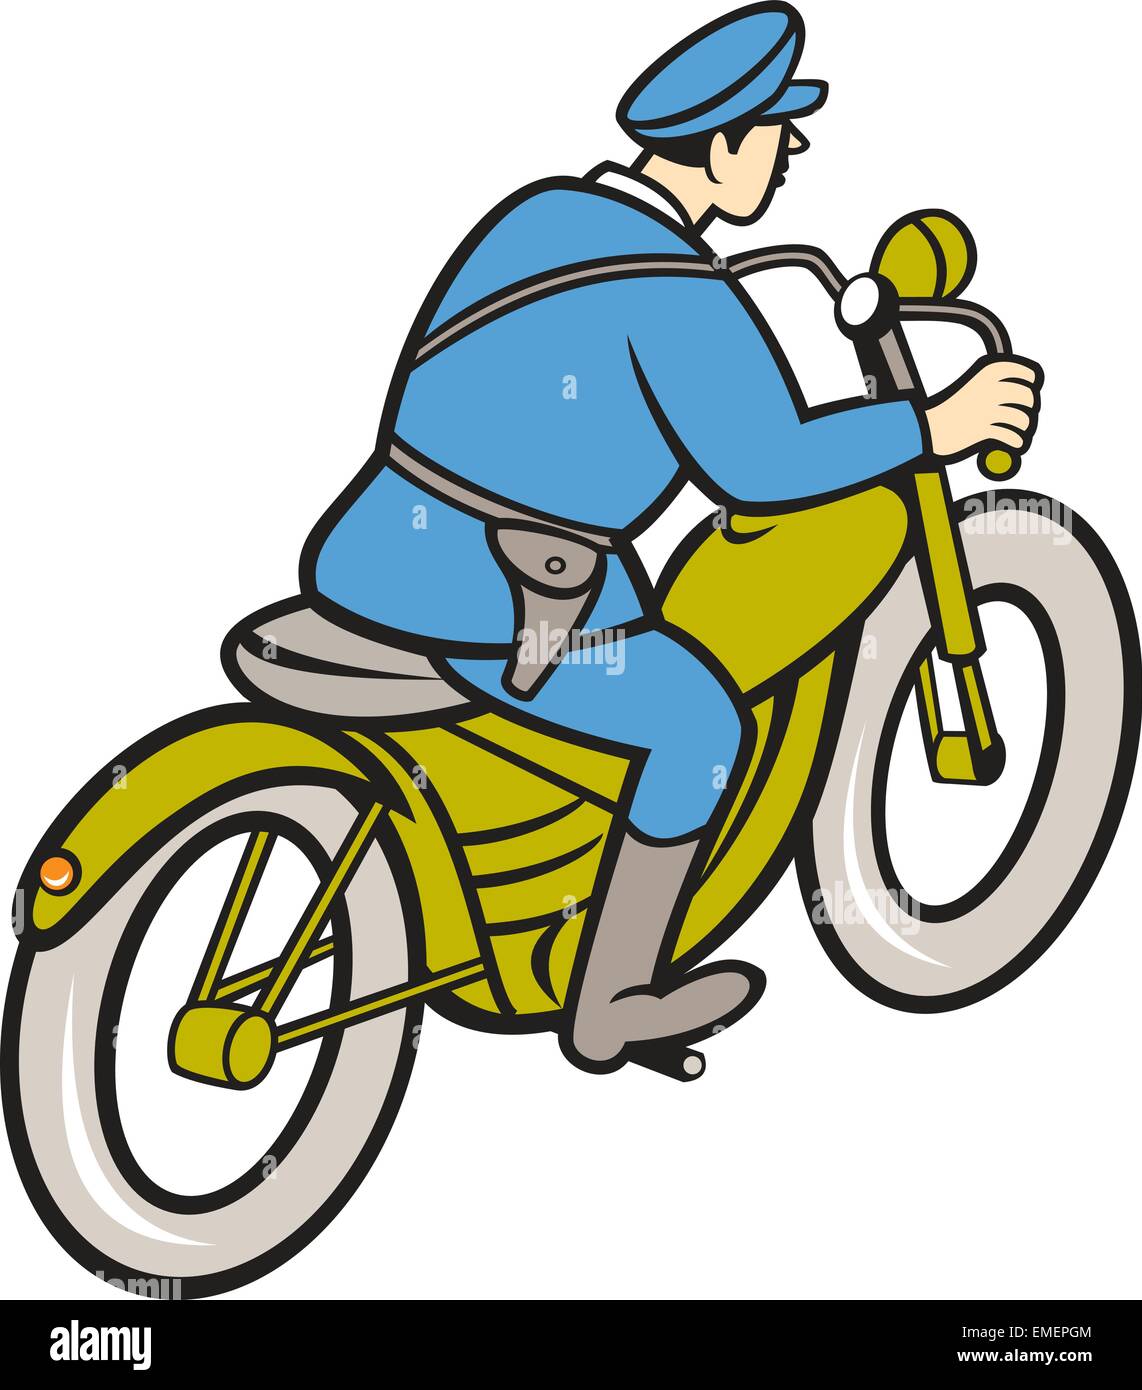 Highway Patrol Policeman Riding Motorbike Cartoon Stock Vector Image & Art  - Alamy